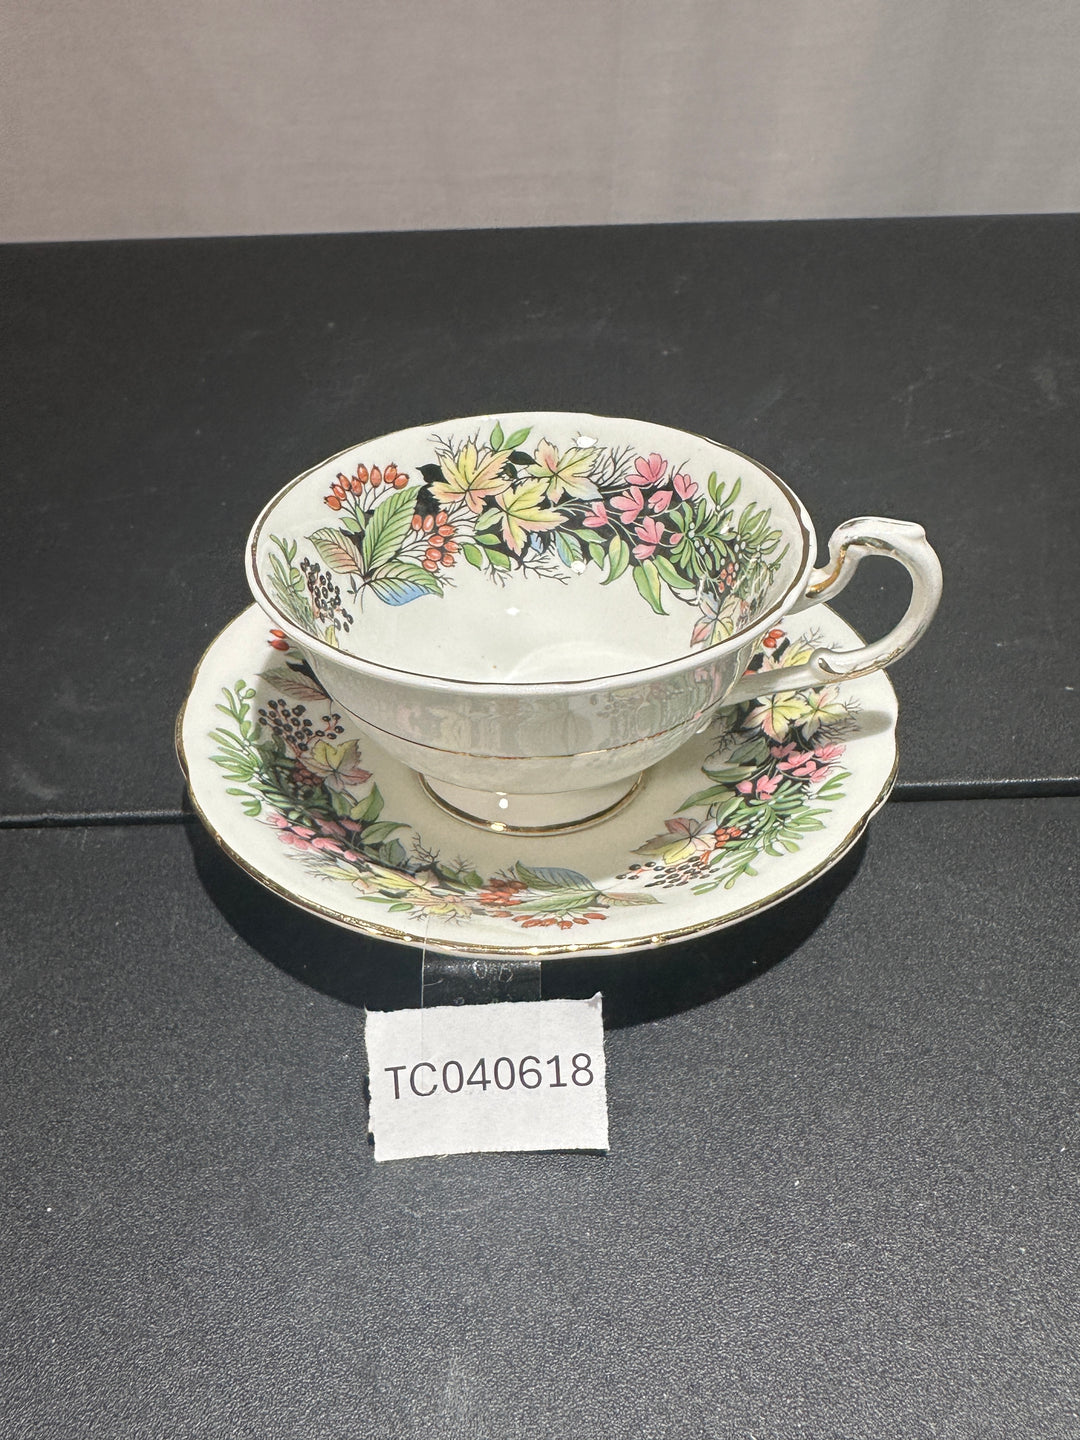 Tea Cup TC040618